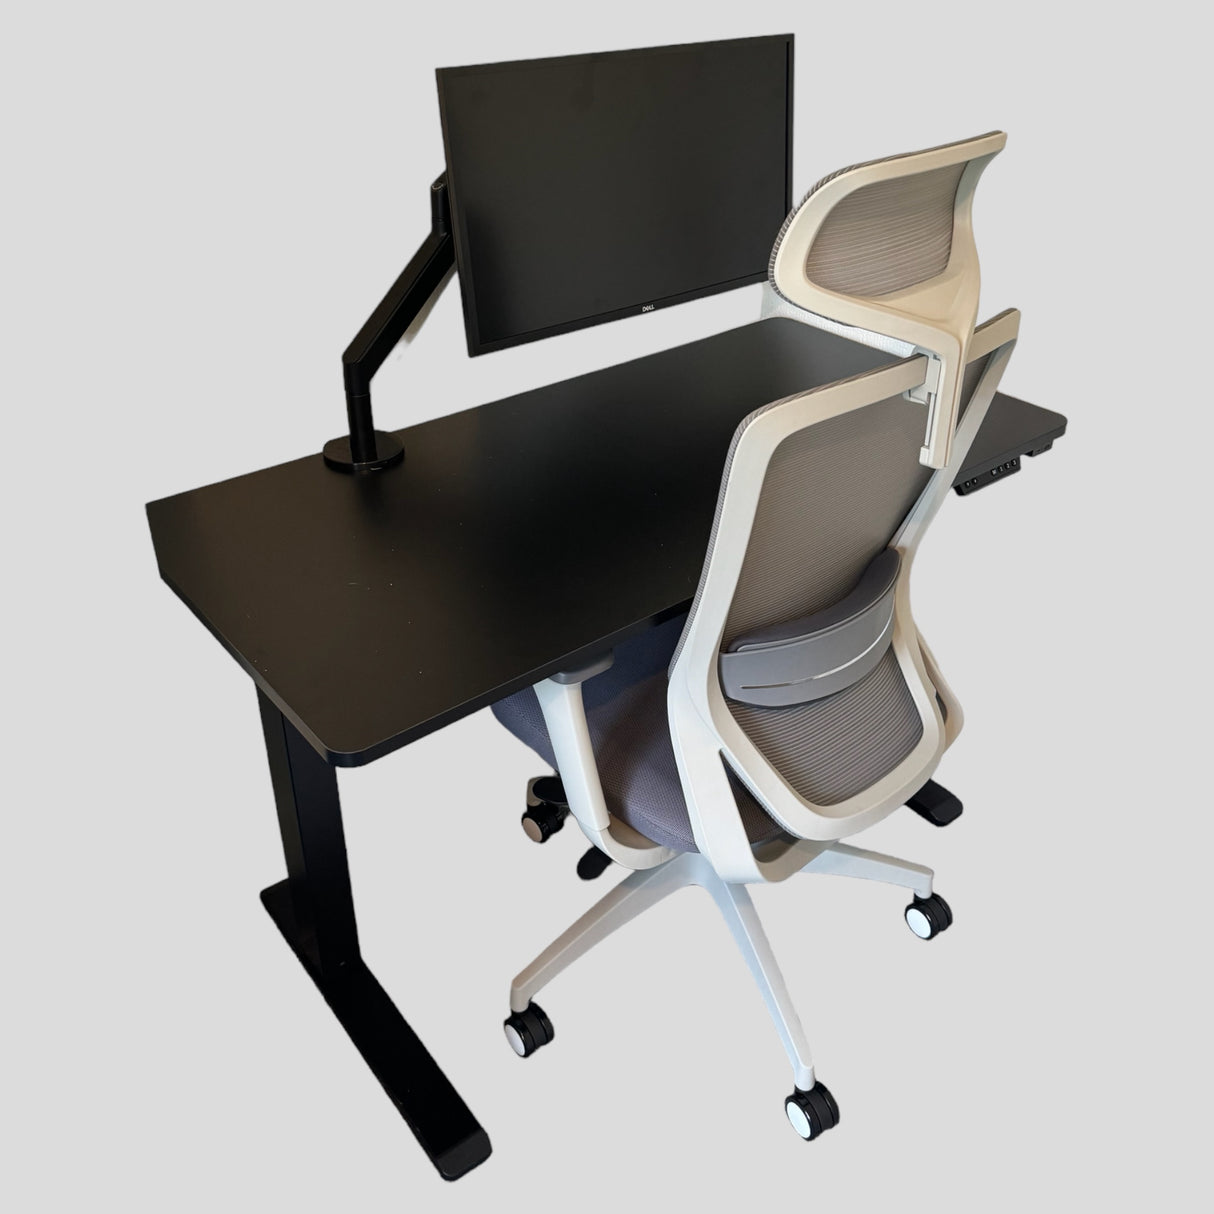 Swift Office Chair